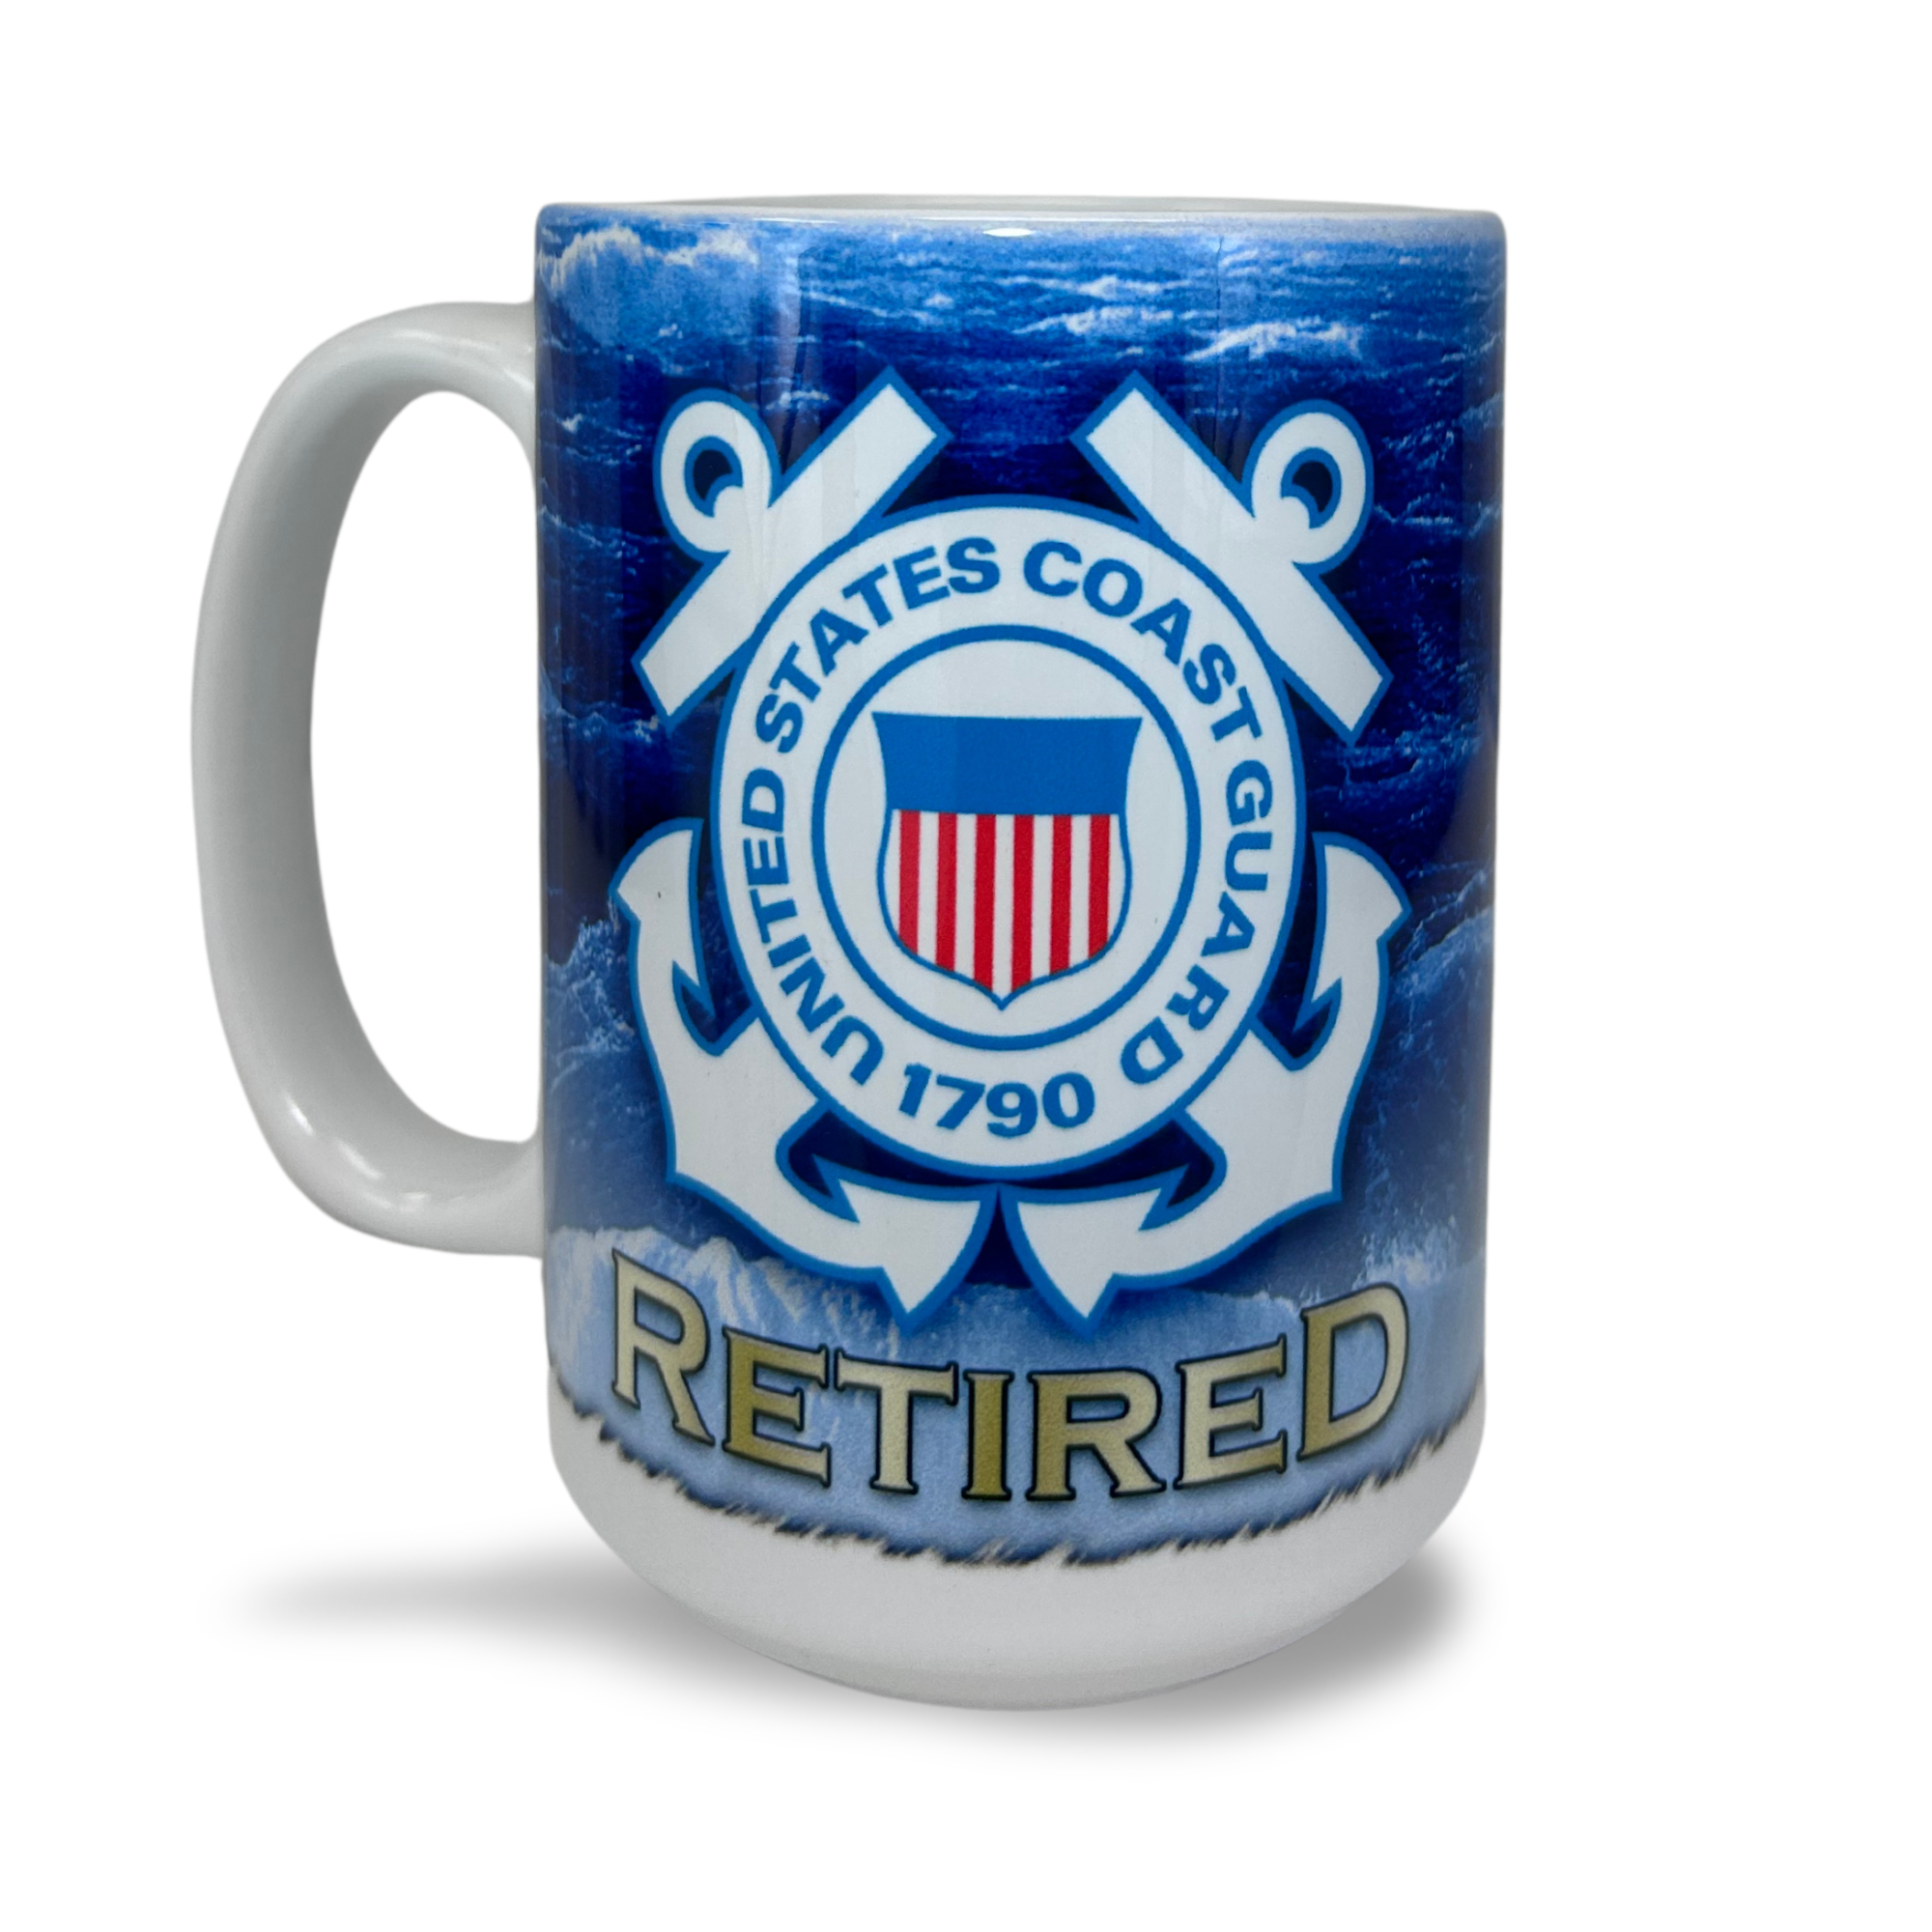 United States Coast Guard Retired Mug